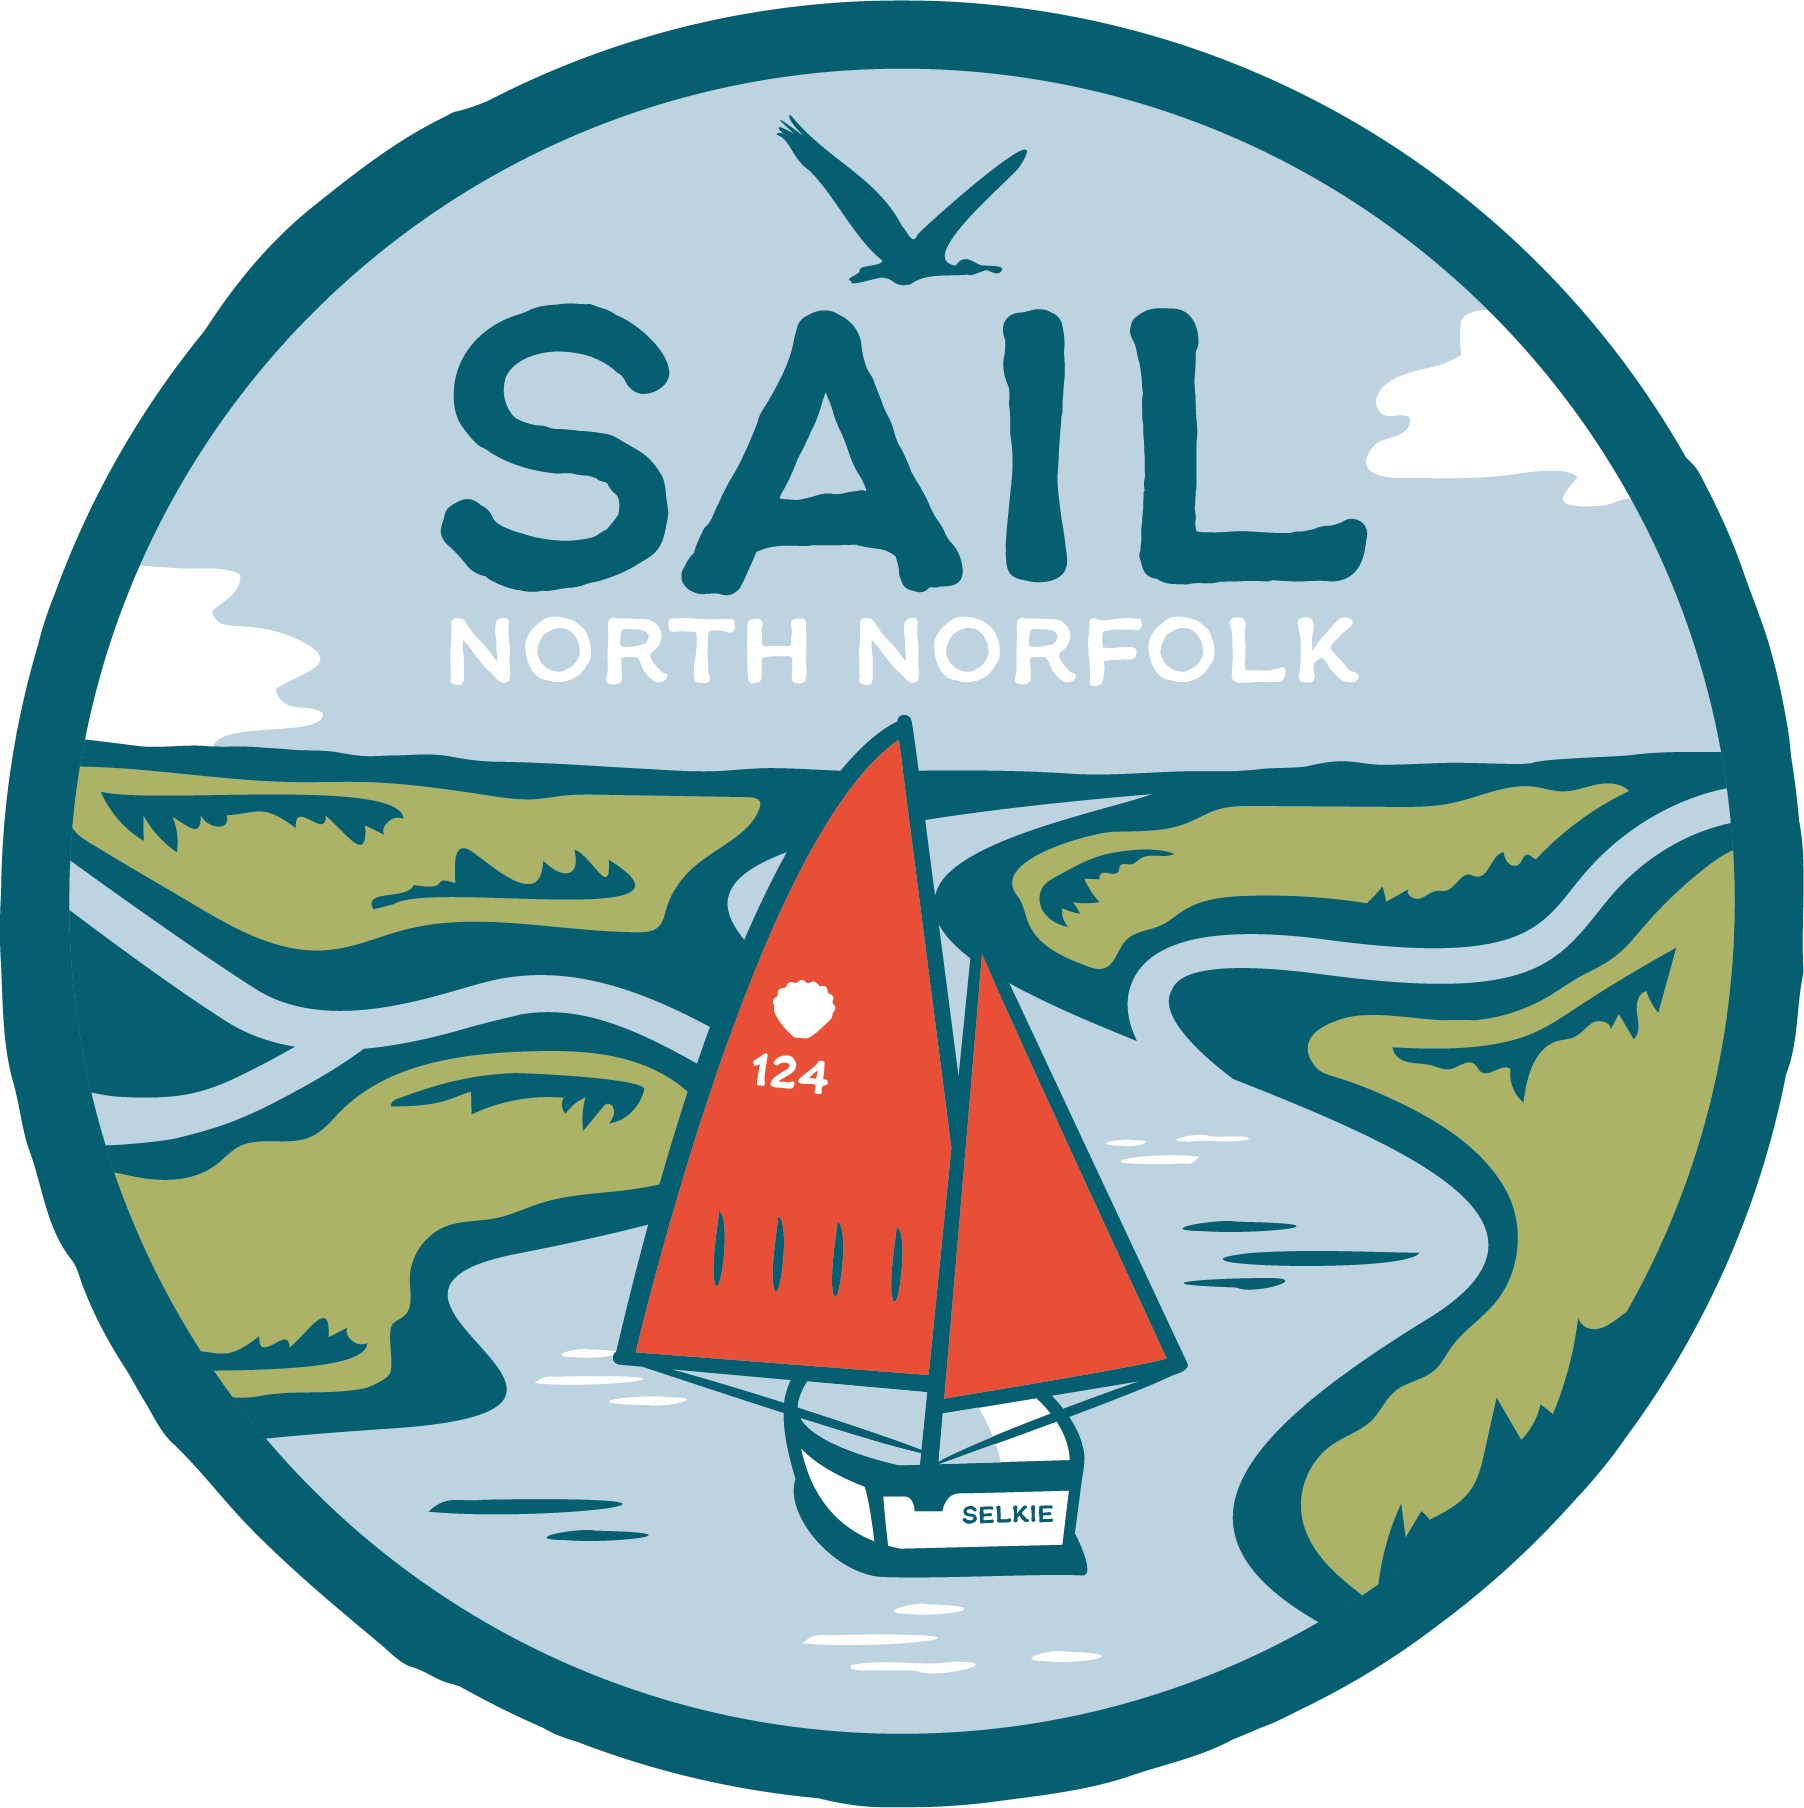 Sail North Norfolk